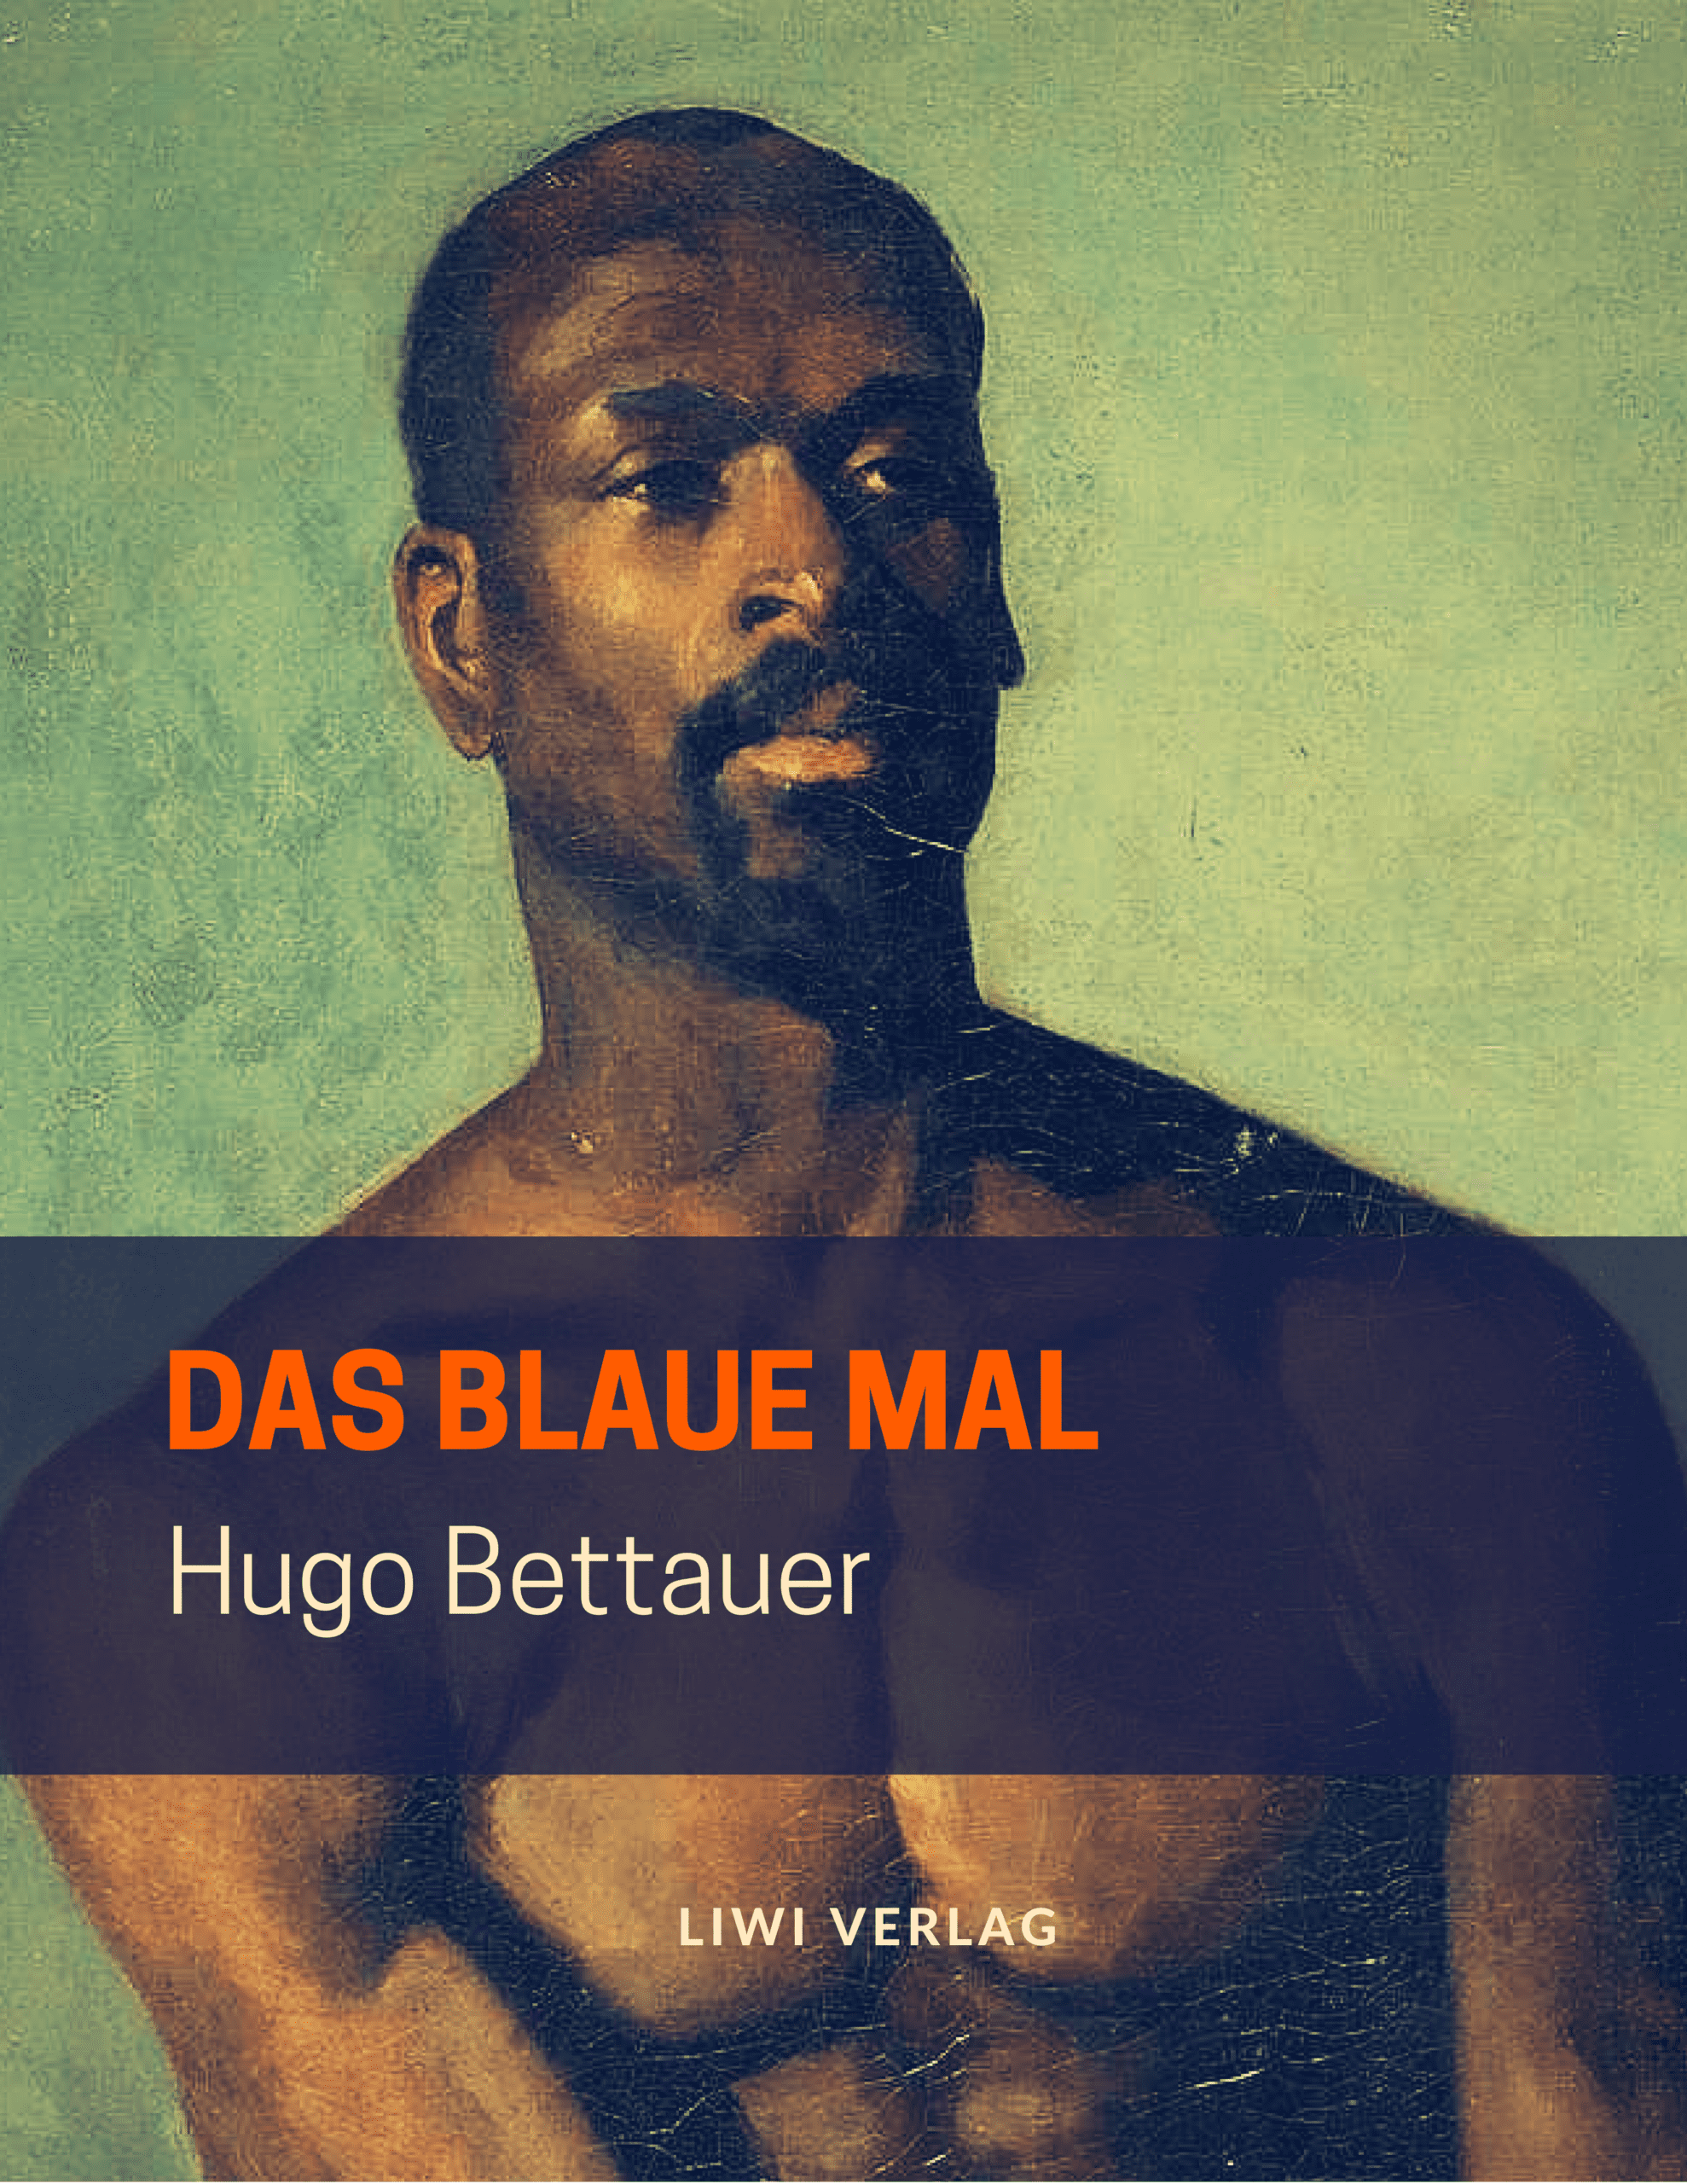 Hugo Bettauer - Das blaue Mal